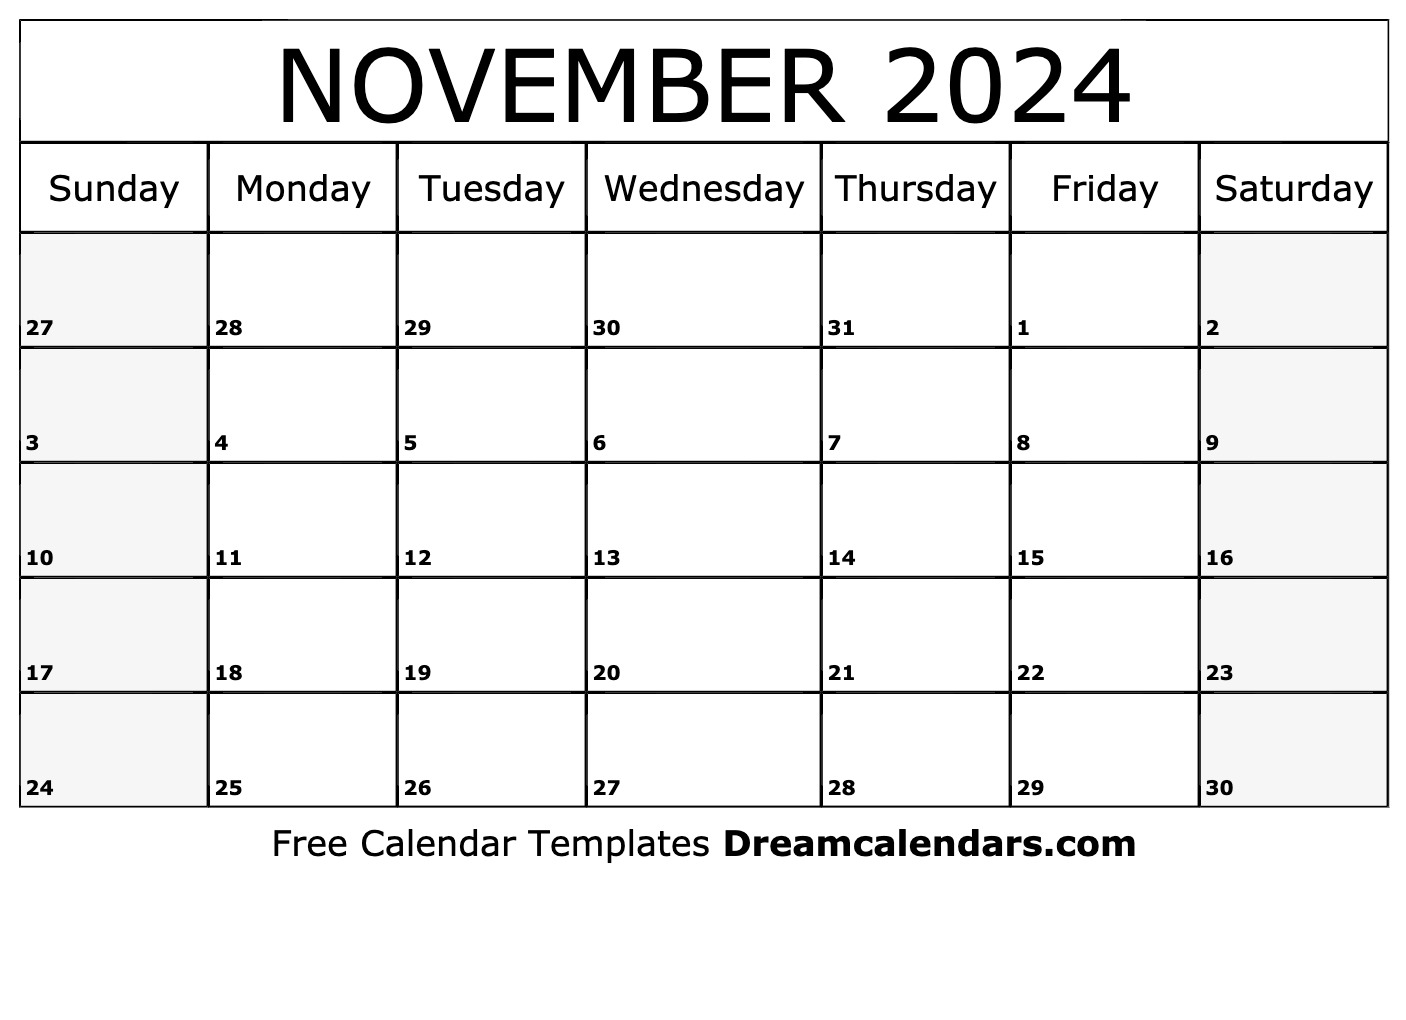 Calendar November 2024 Kannada Best Top Awesome Famous Lunar Events